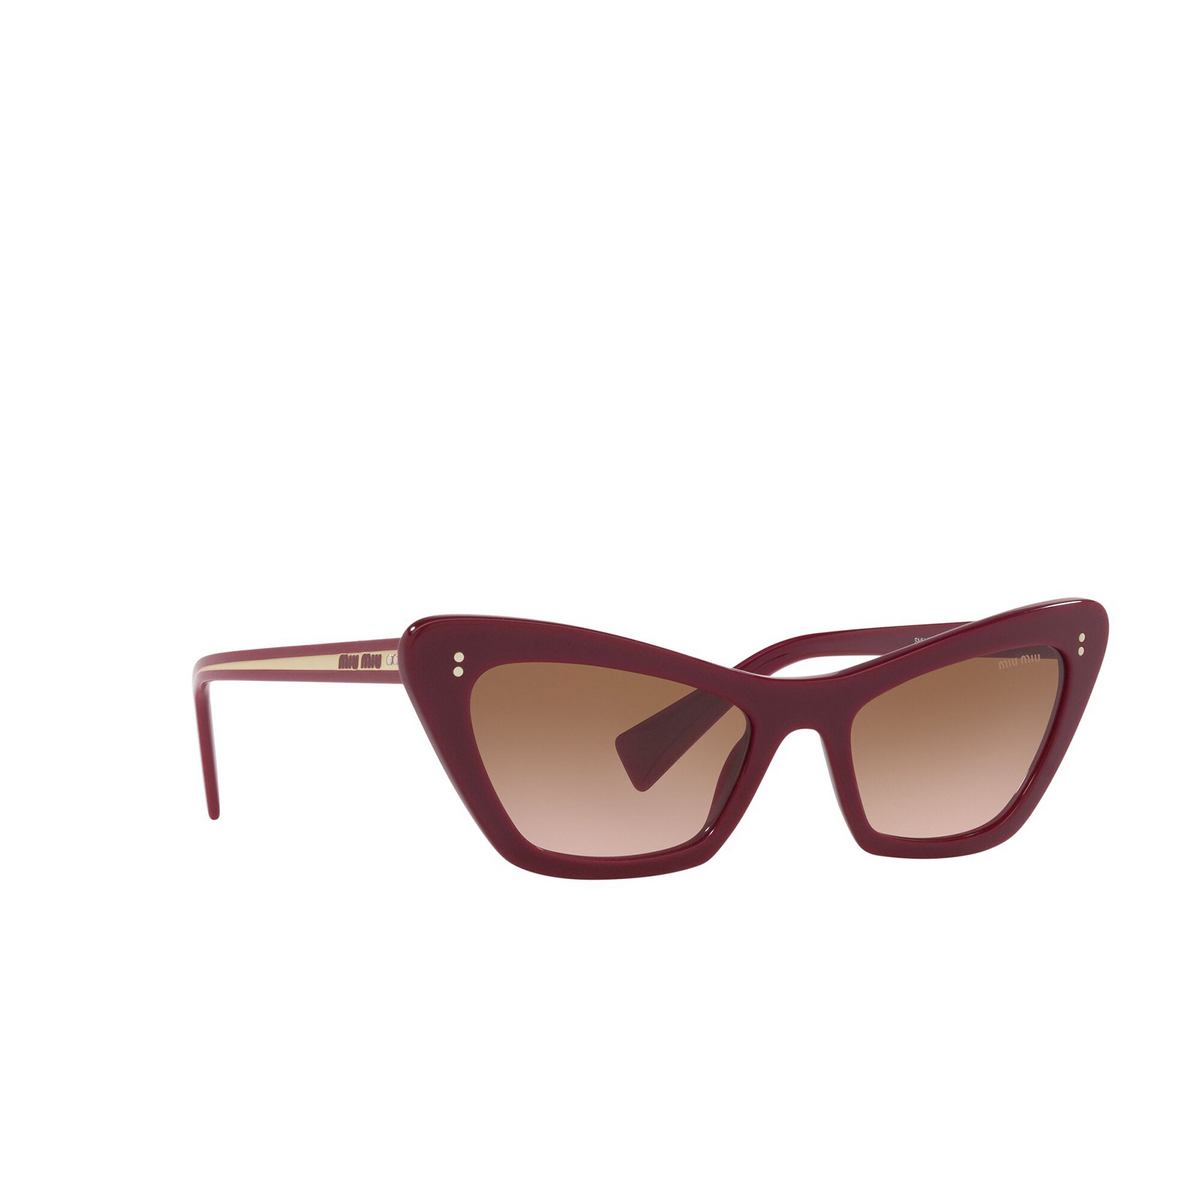 Miu Miu® Cat-eye Sunglasses: MU 03XS color Bordeaux USH0A6 - three-quarters view.